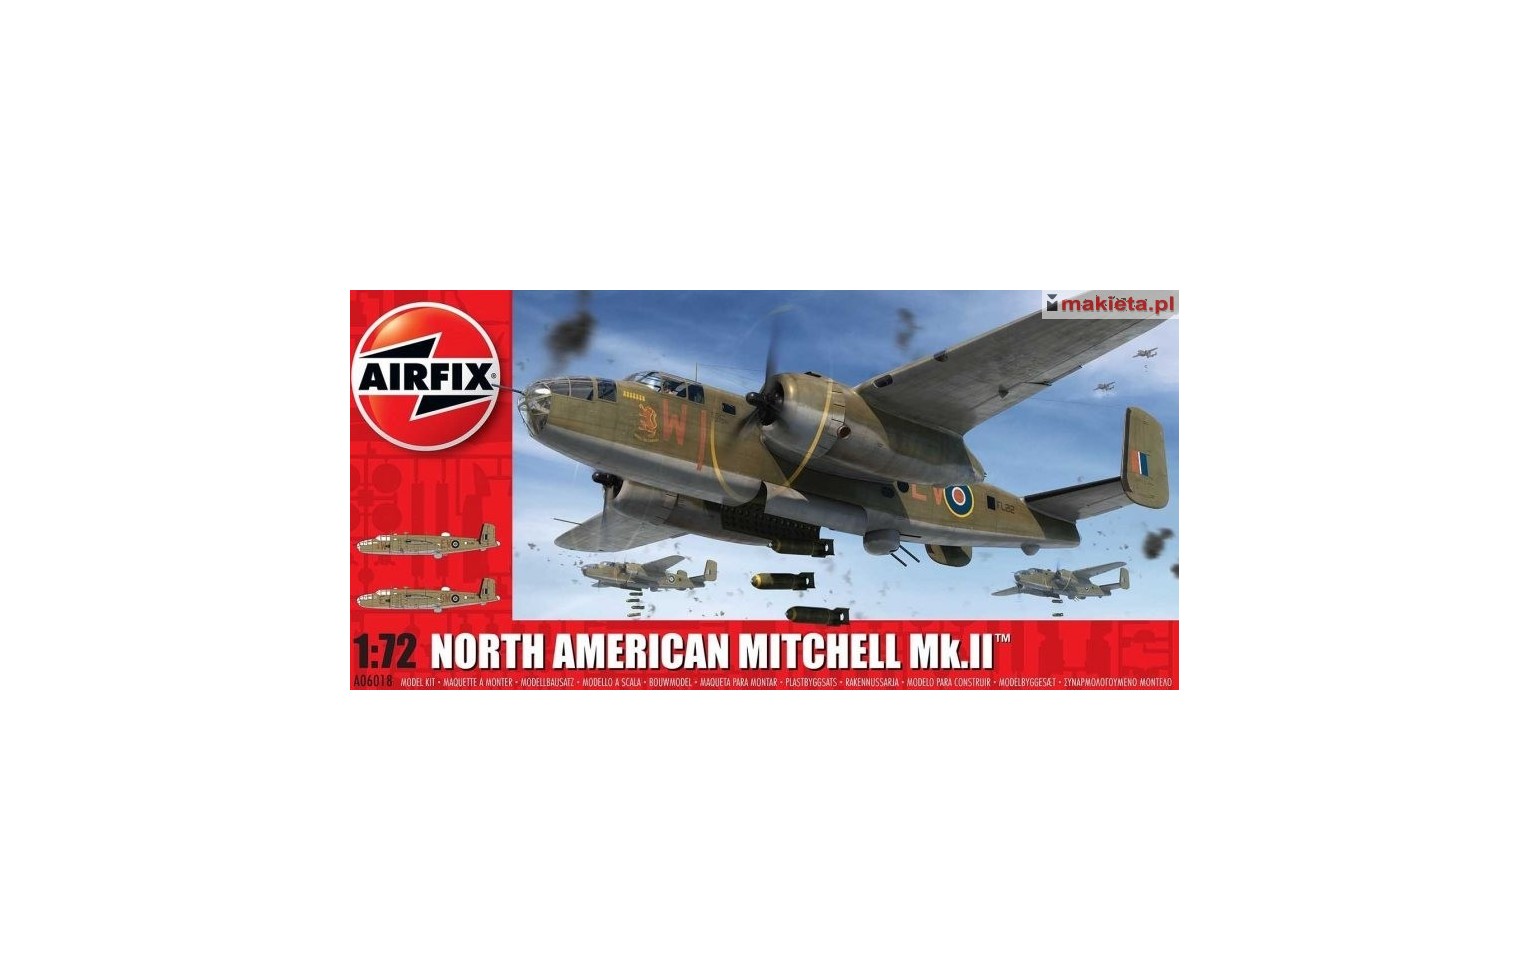 Airfix 06018, North American Mitchell Mk.II™, skala 1:72